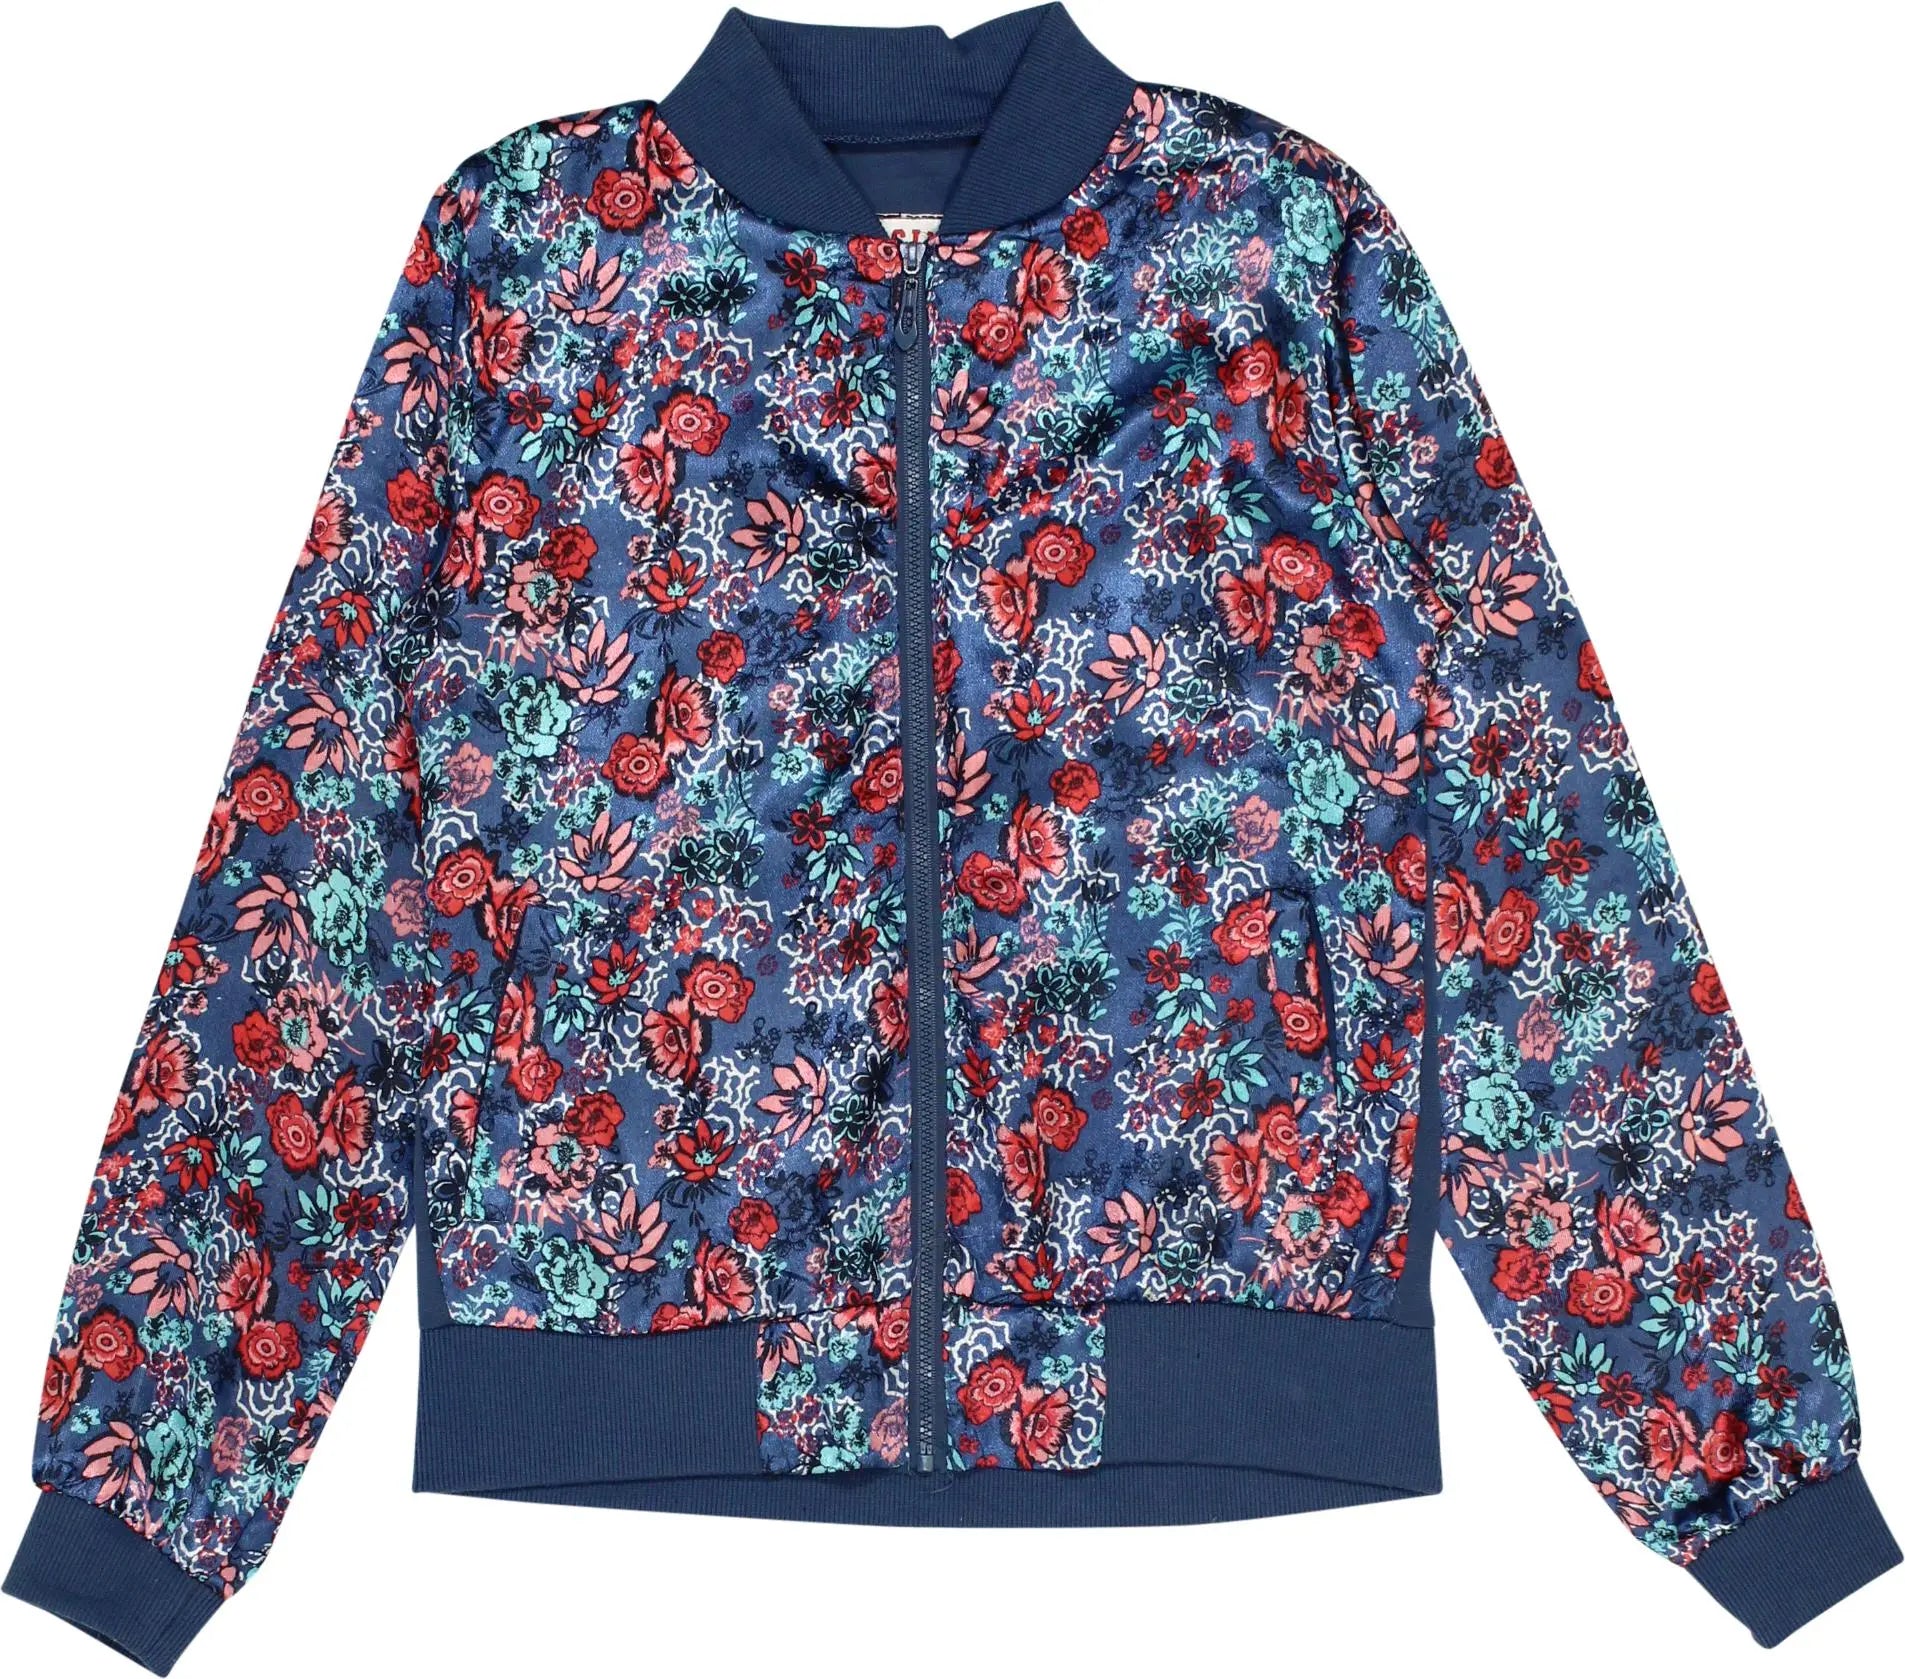 Zeeman - Floral Jacket- ThriftTale.com - Vintage and second handclothing